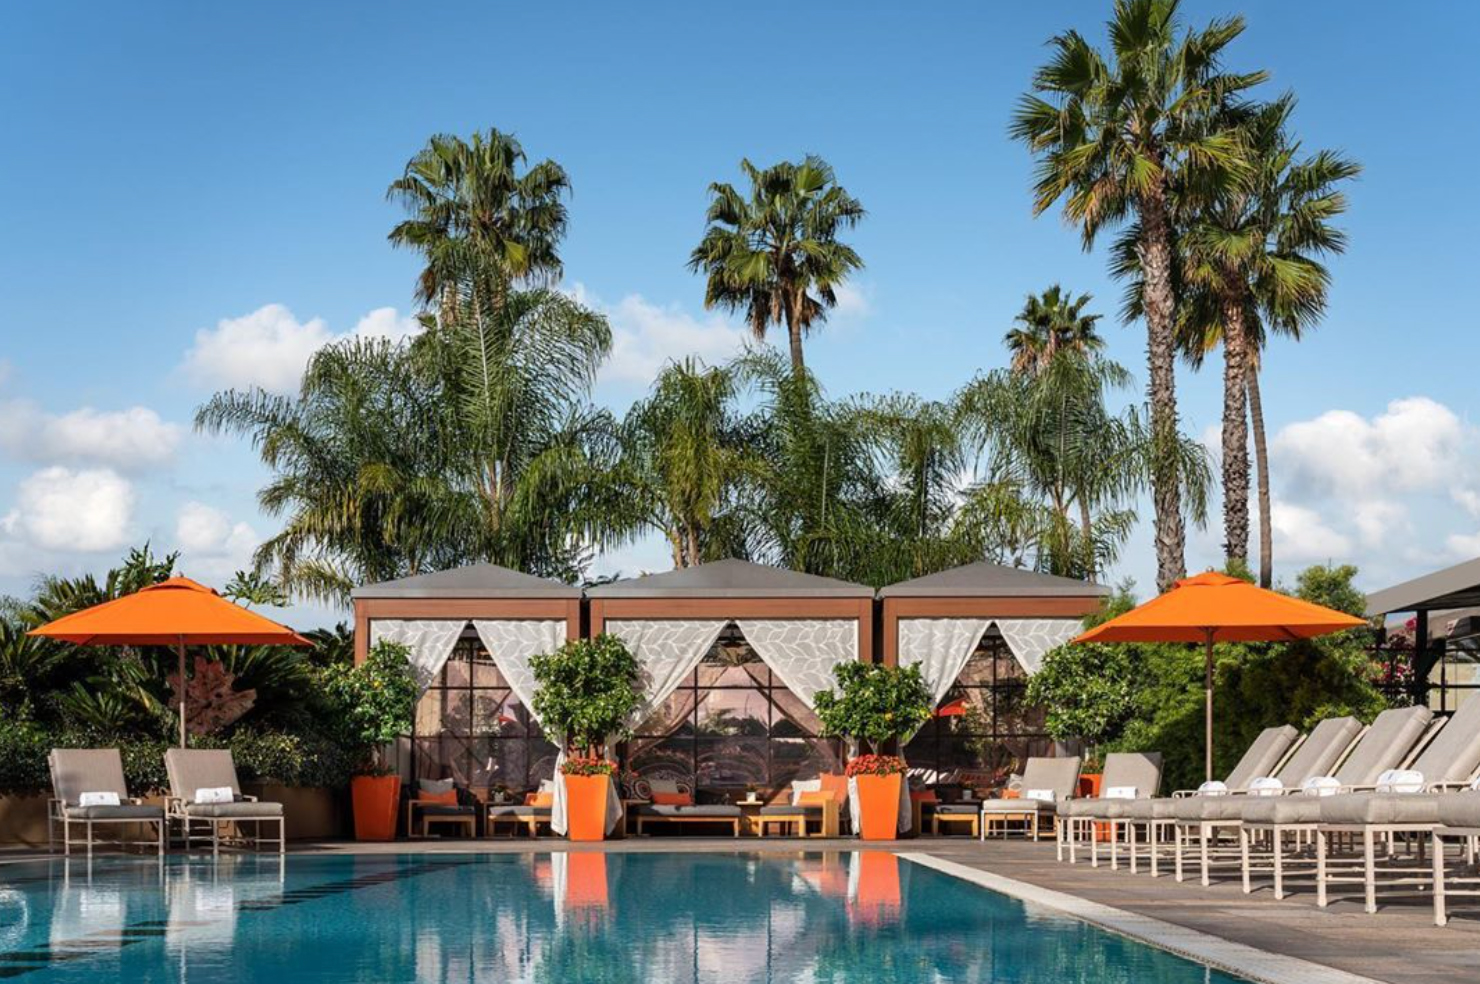 Image of FS LA Hotel poolside